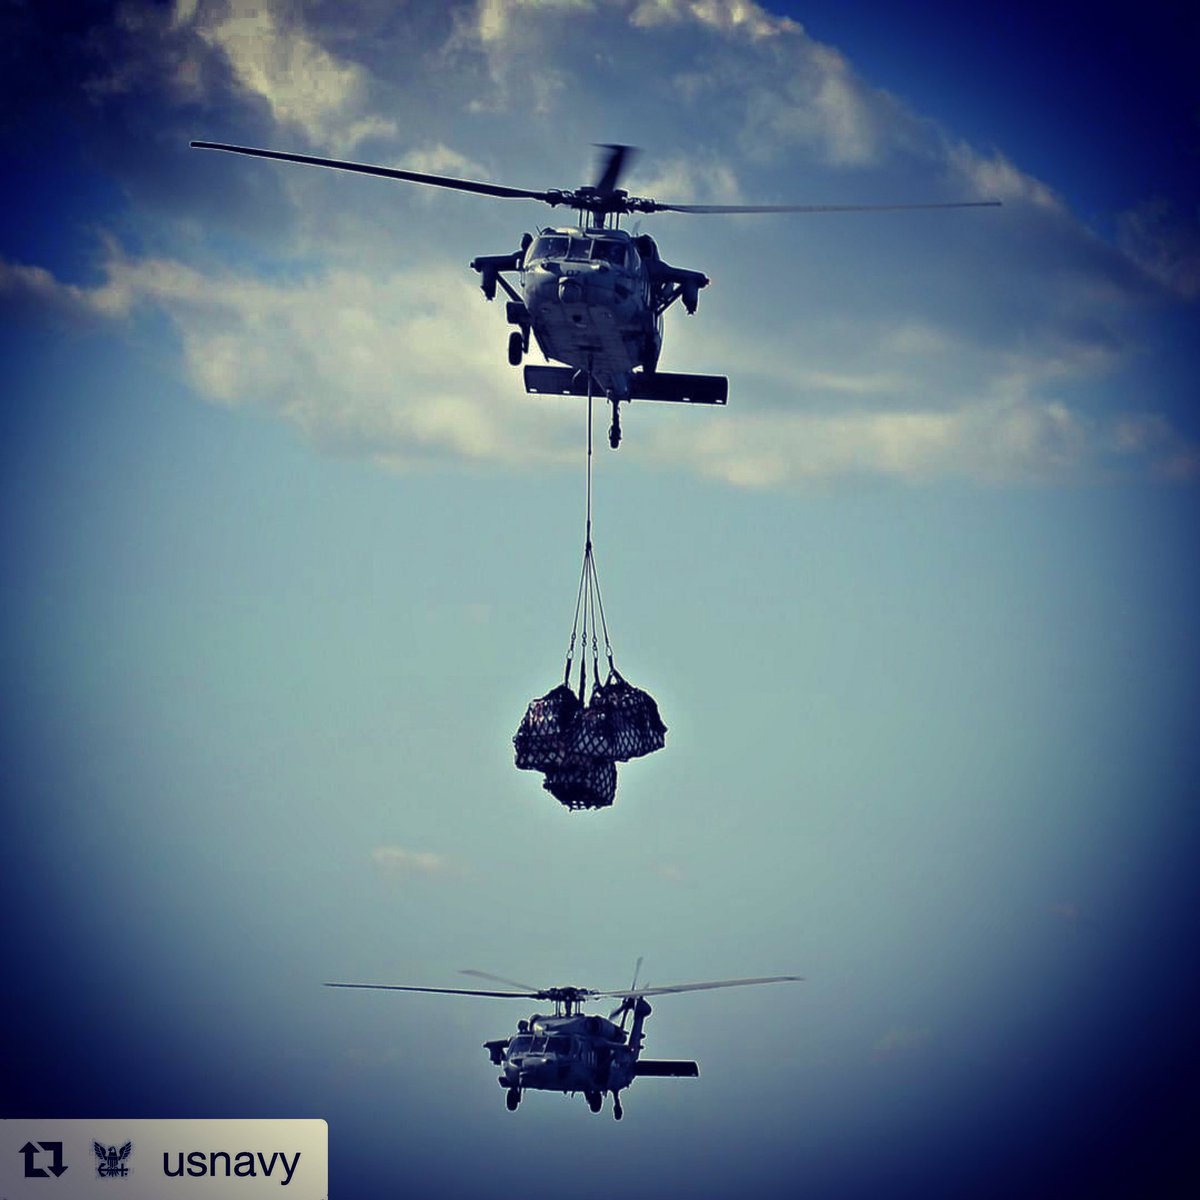 #Repost @usnavy
・・
Special delivery!
#USNavy #SeaHawk #helicopters #IslandKnights #USSWasp #USNSTippecanoe 
#BlueGreenTeam #ForgedByTheSea #GatorNavy #InstaNavy #LifeAboveTheSea #LifeAtSea #LifeOnTheWater #Military #NavyLife #NavyReadiness #Sailors #SeaLife @deptofdefense #SOT